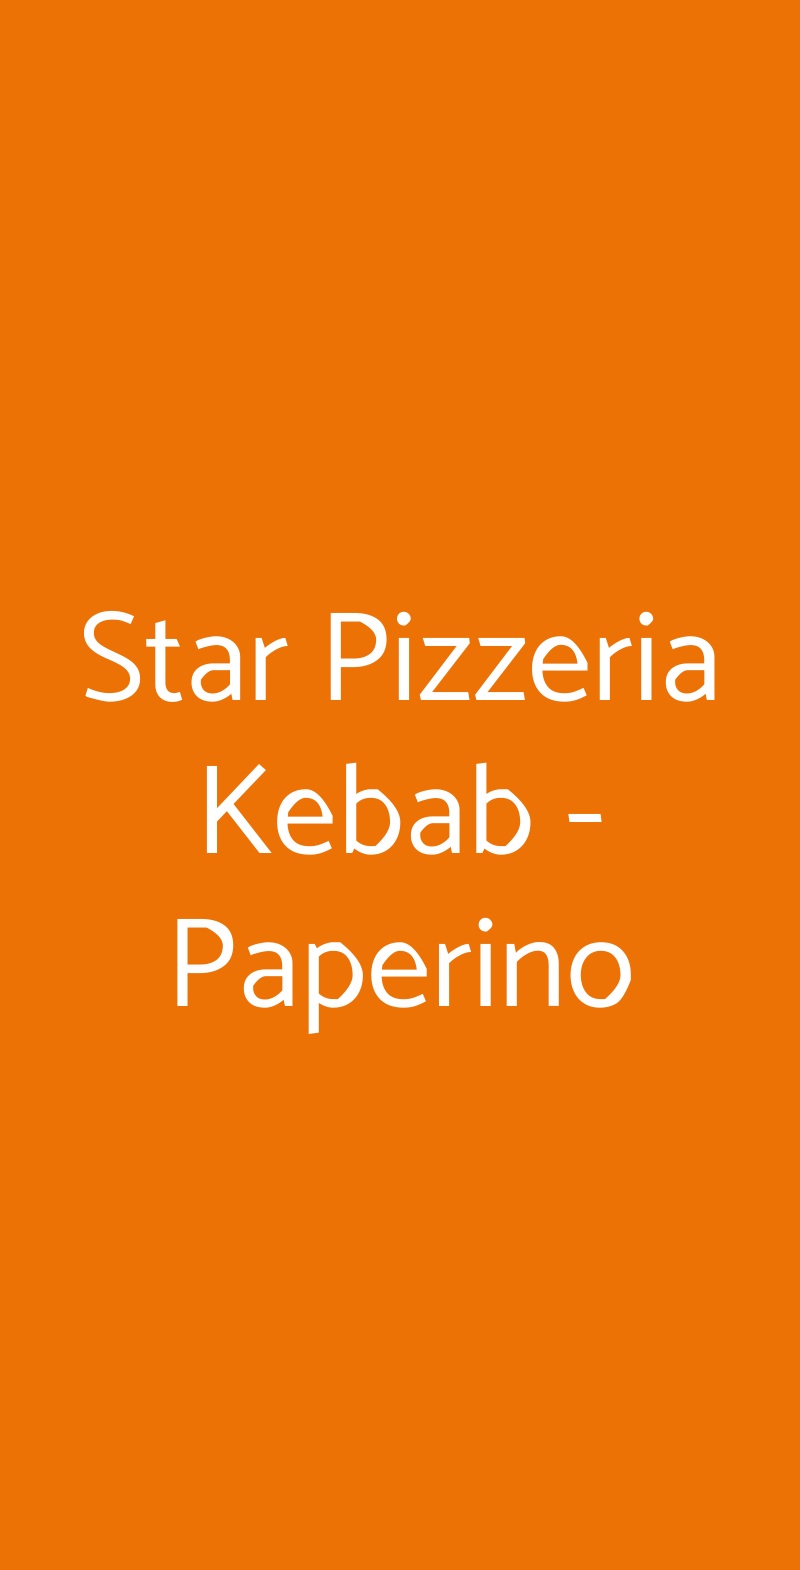 Star Pizzeria Kebab - Paperino Prato menù 1 pagina